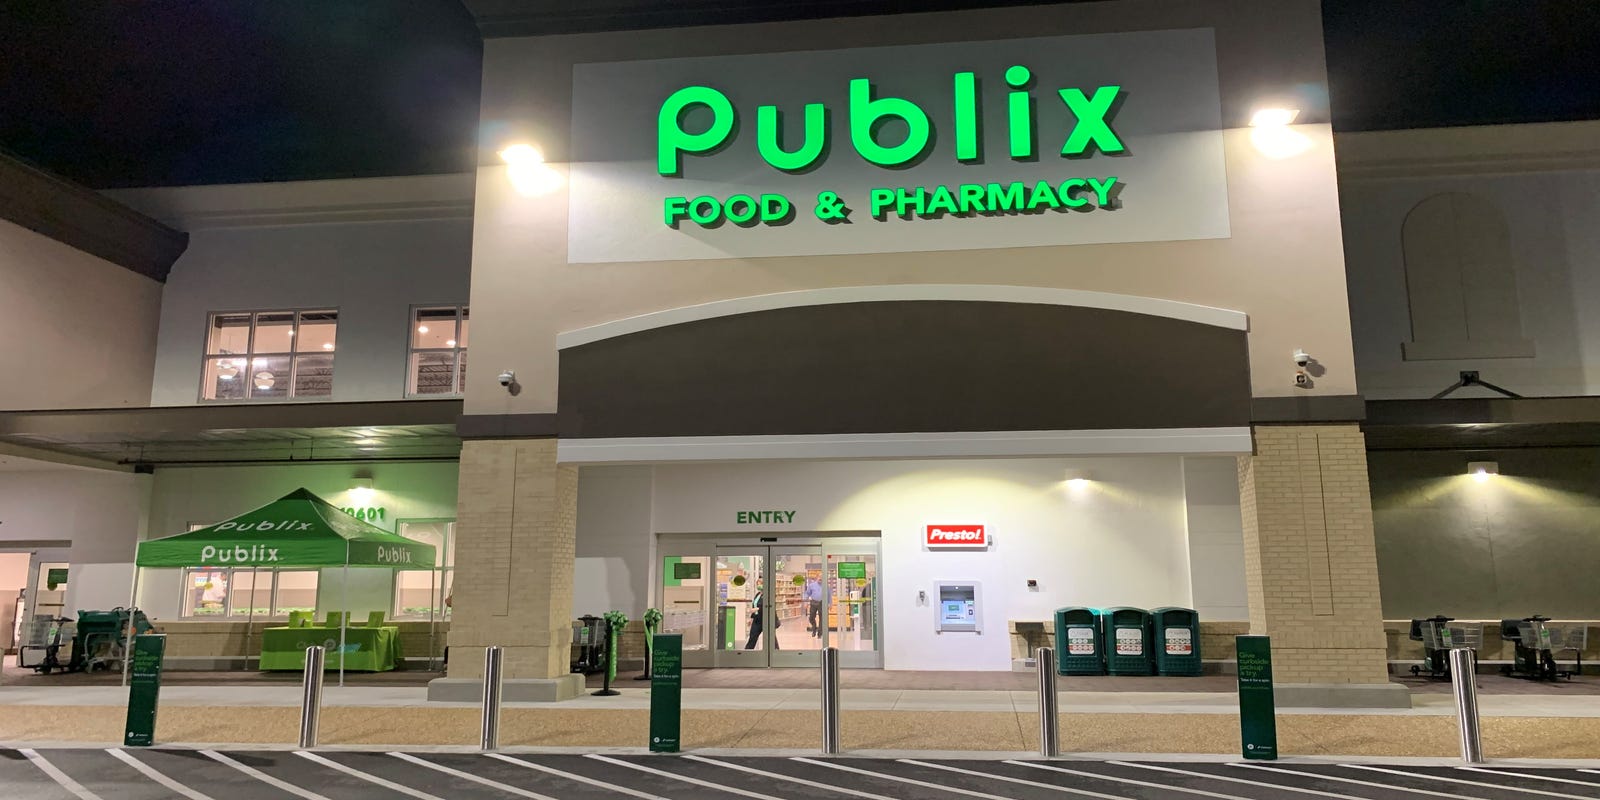 Indiana supermarkets: Publix expanding to Kentucky.